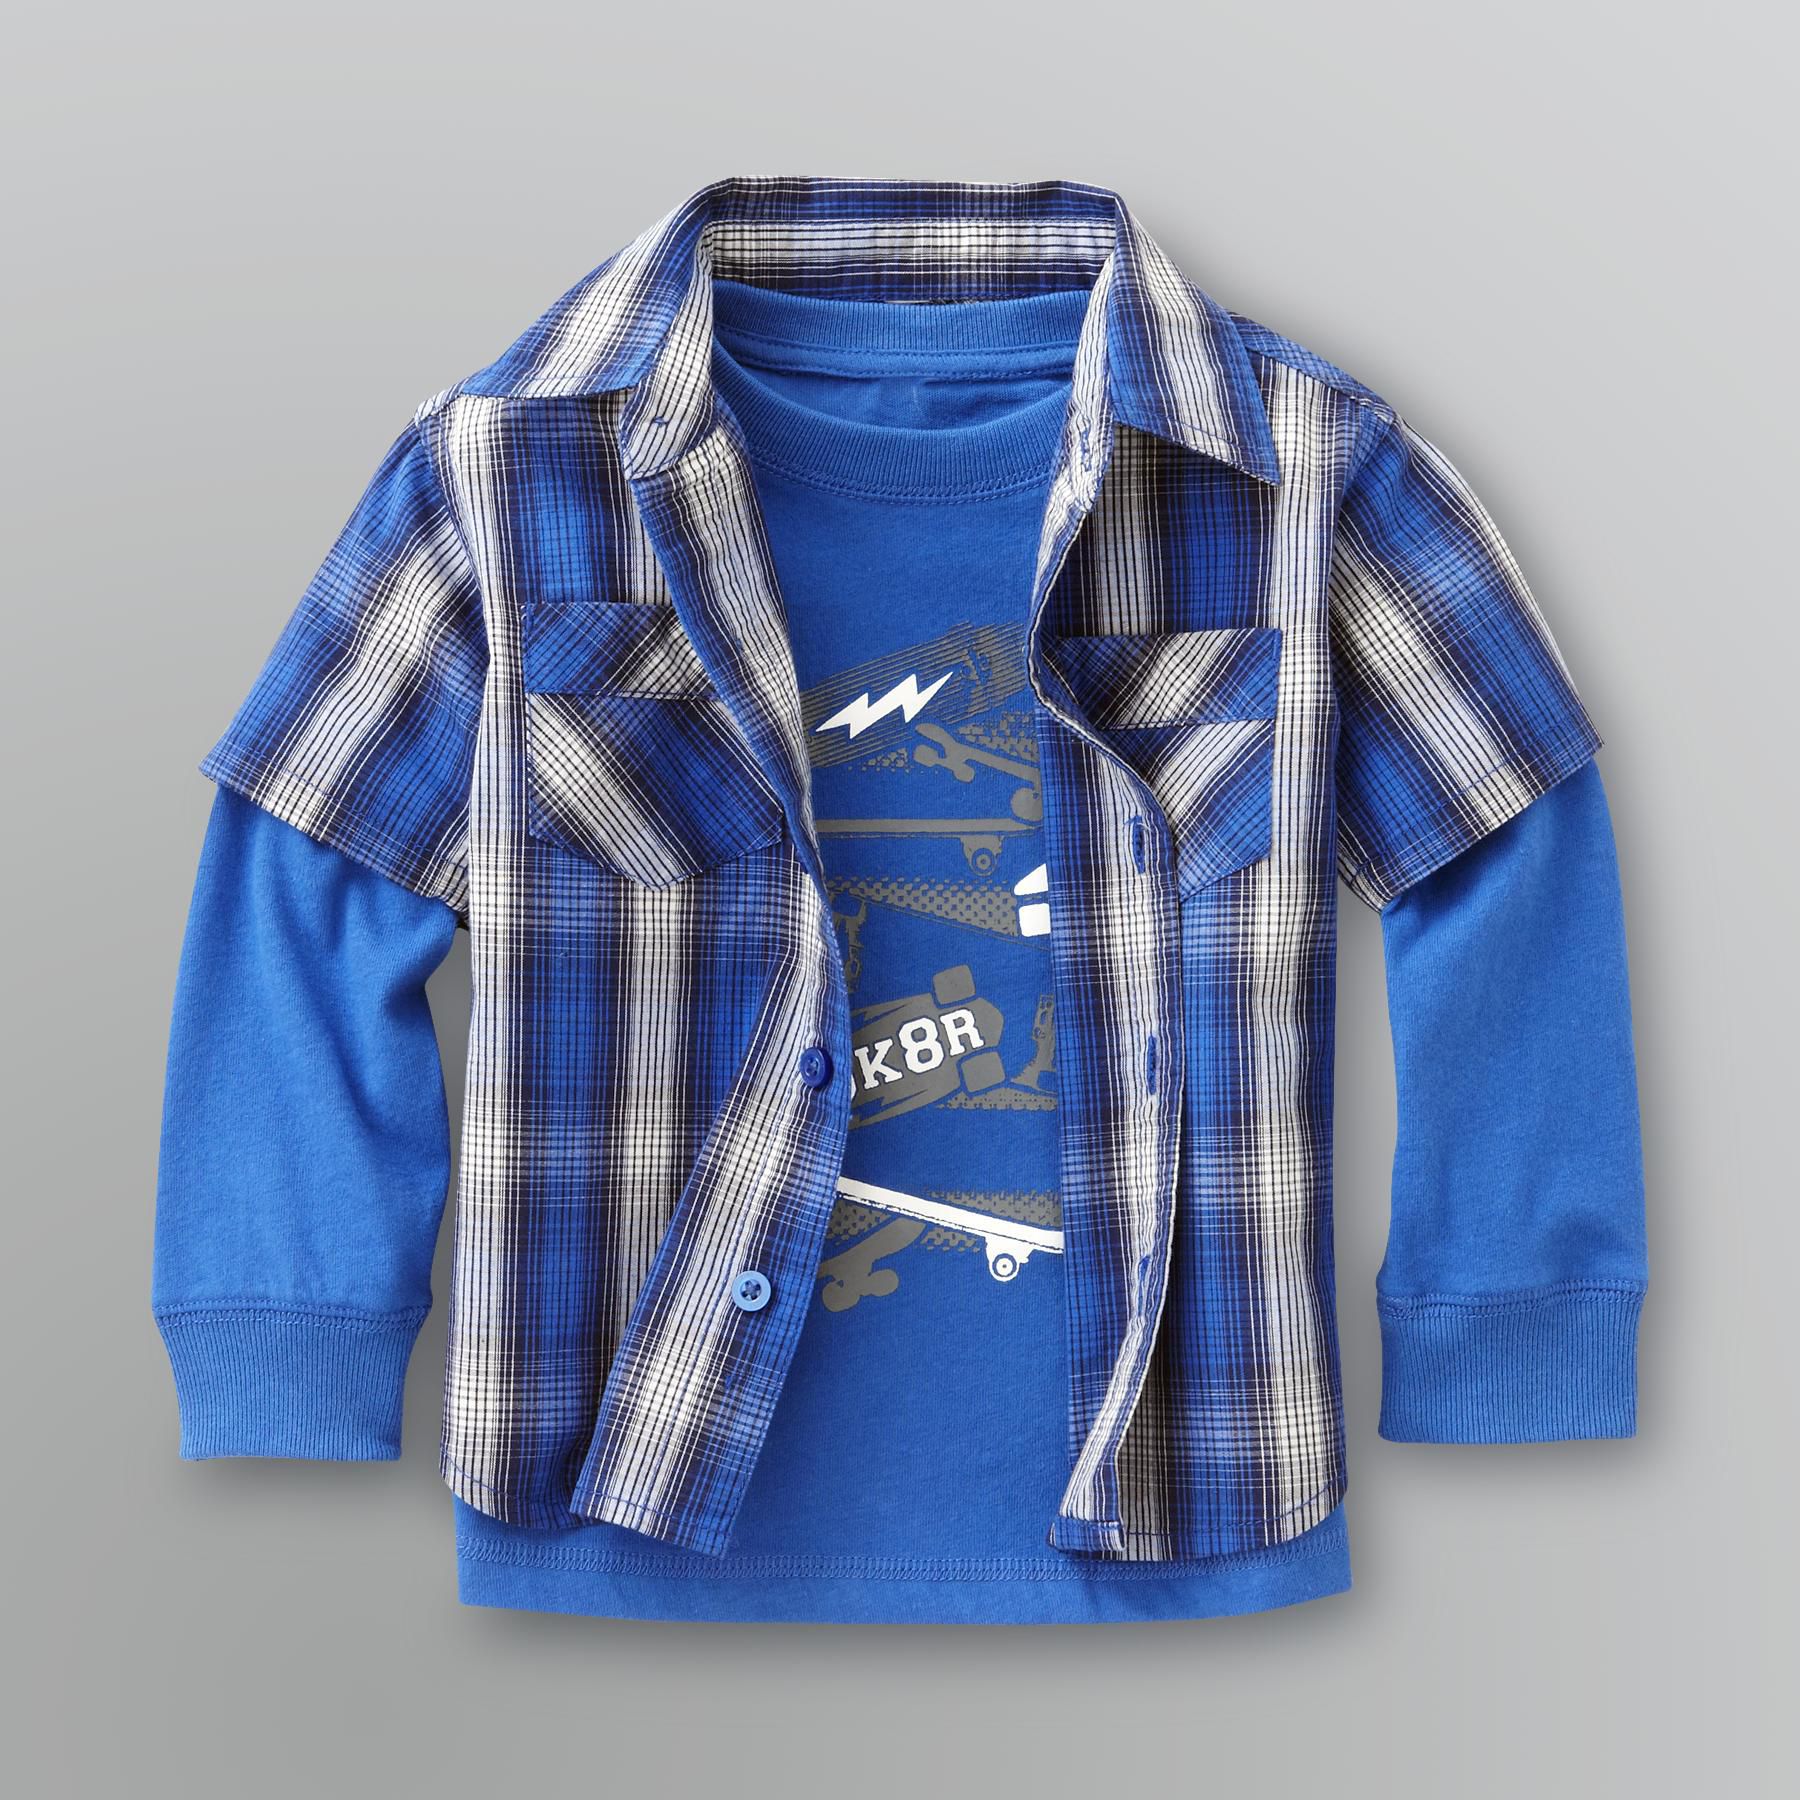 Toughskins Infant & Toddler Boy's Skater Graphic Shirt Set